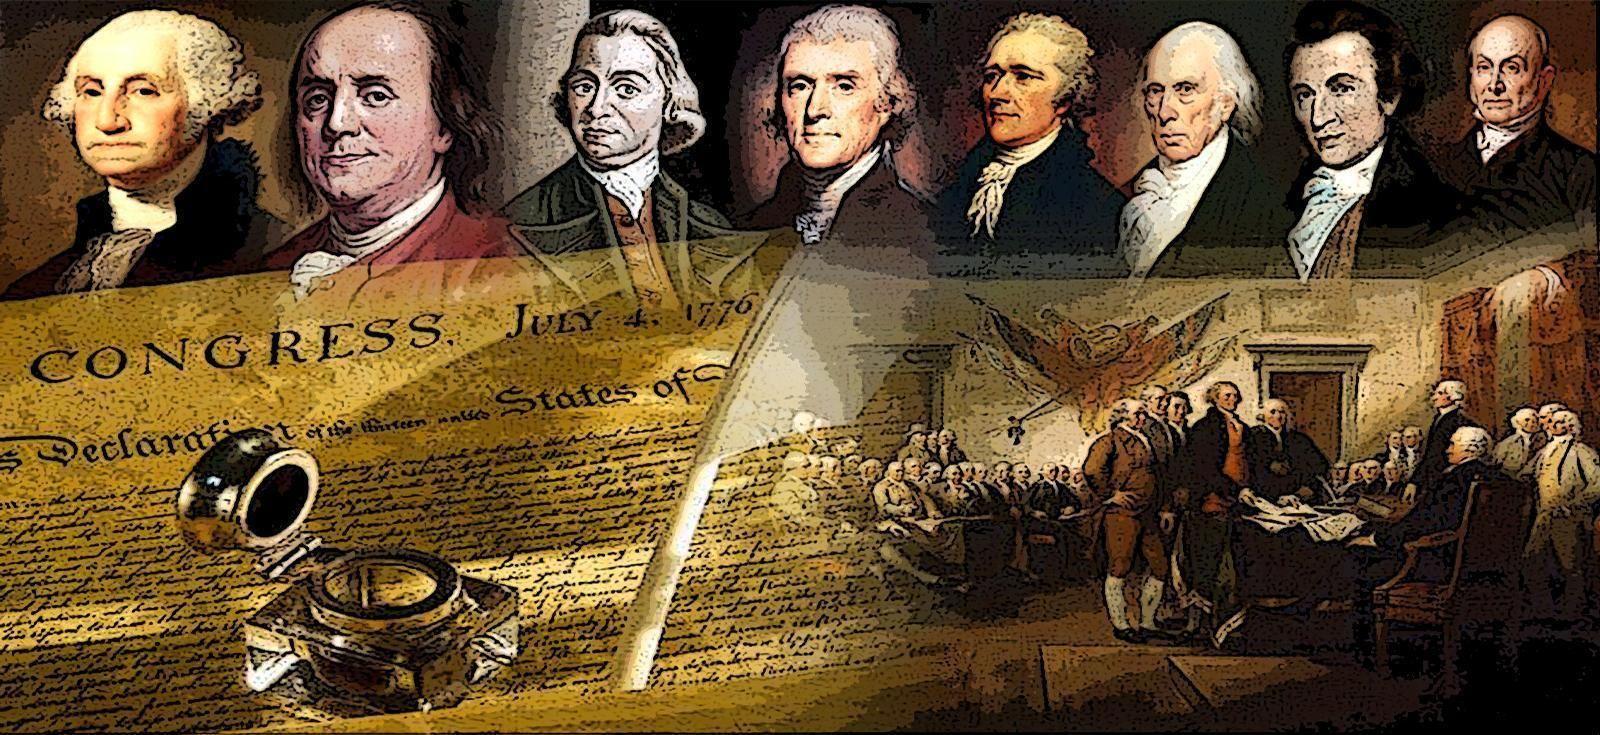 Declaration of Independence. American Revolution -Spirit of 1776